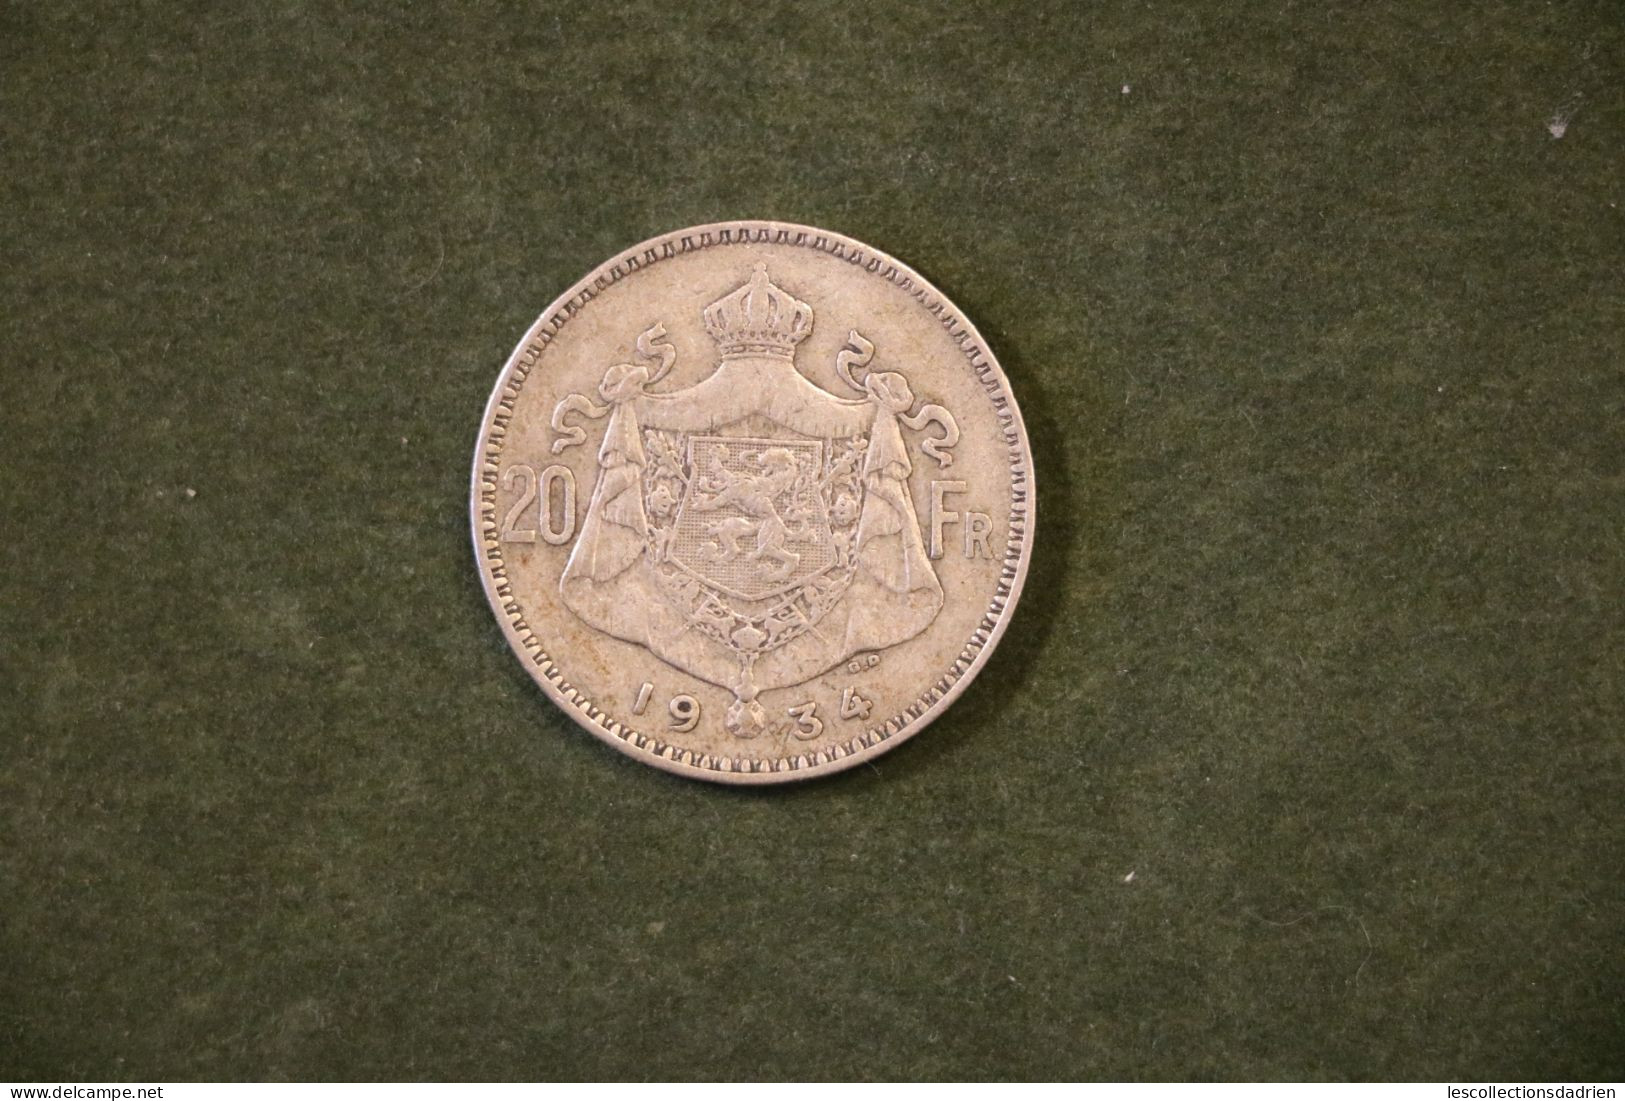 Pièce En Argent Belgique 20 Francs 1934 FL -  Belgian Silver Coin /1 - 20 Francs & 4 Belgas